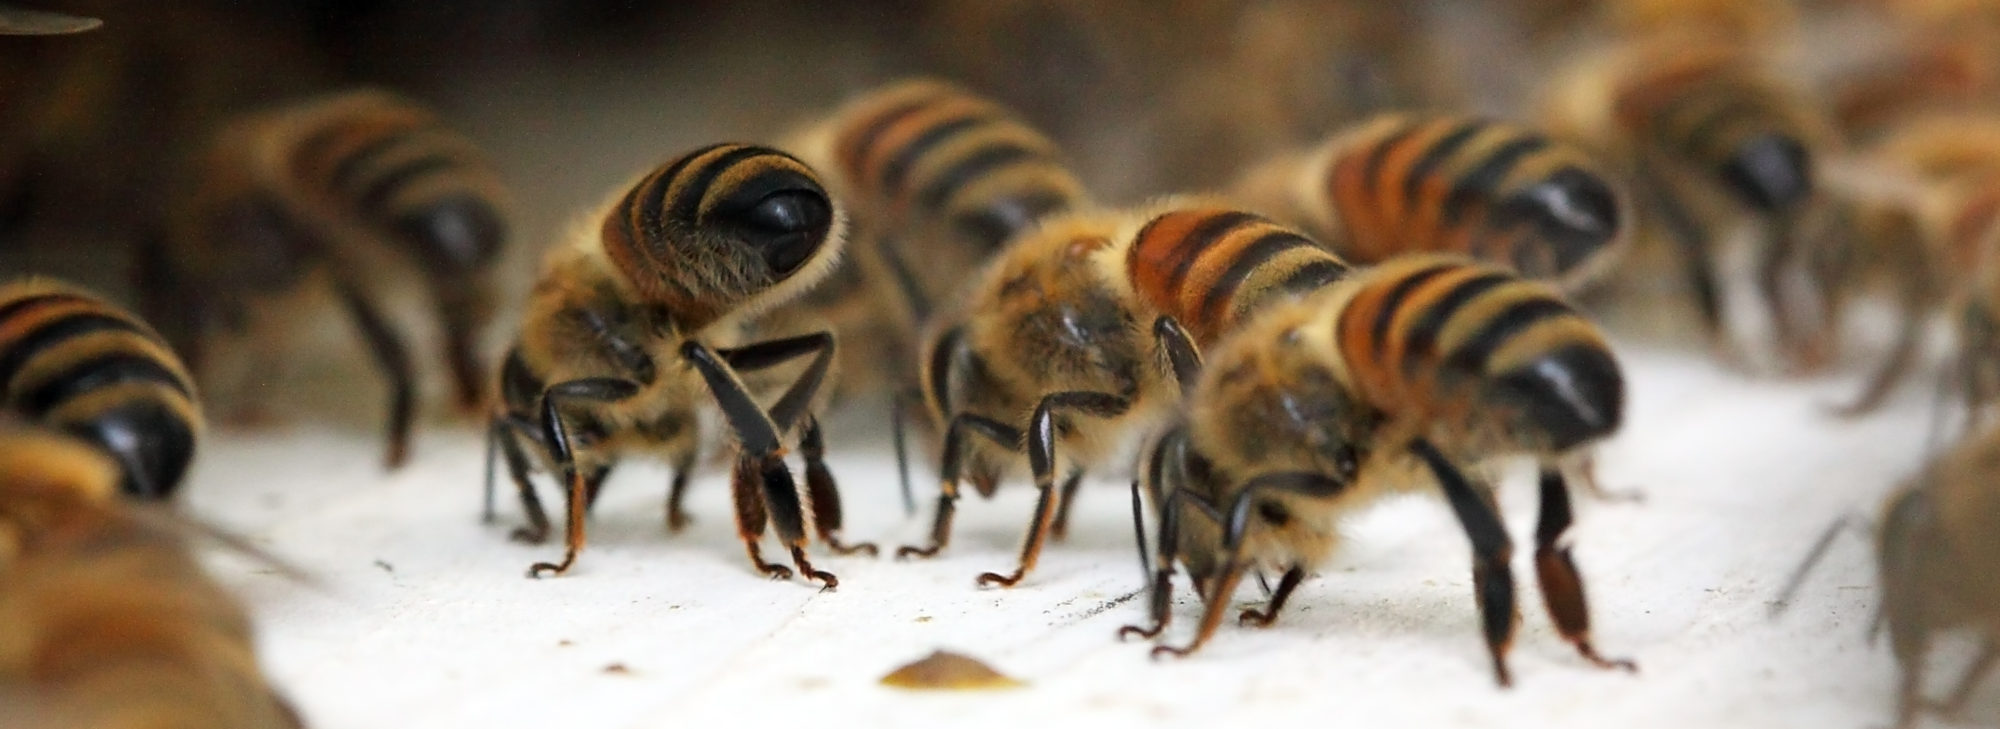 Johnston County Beekeepers Association